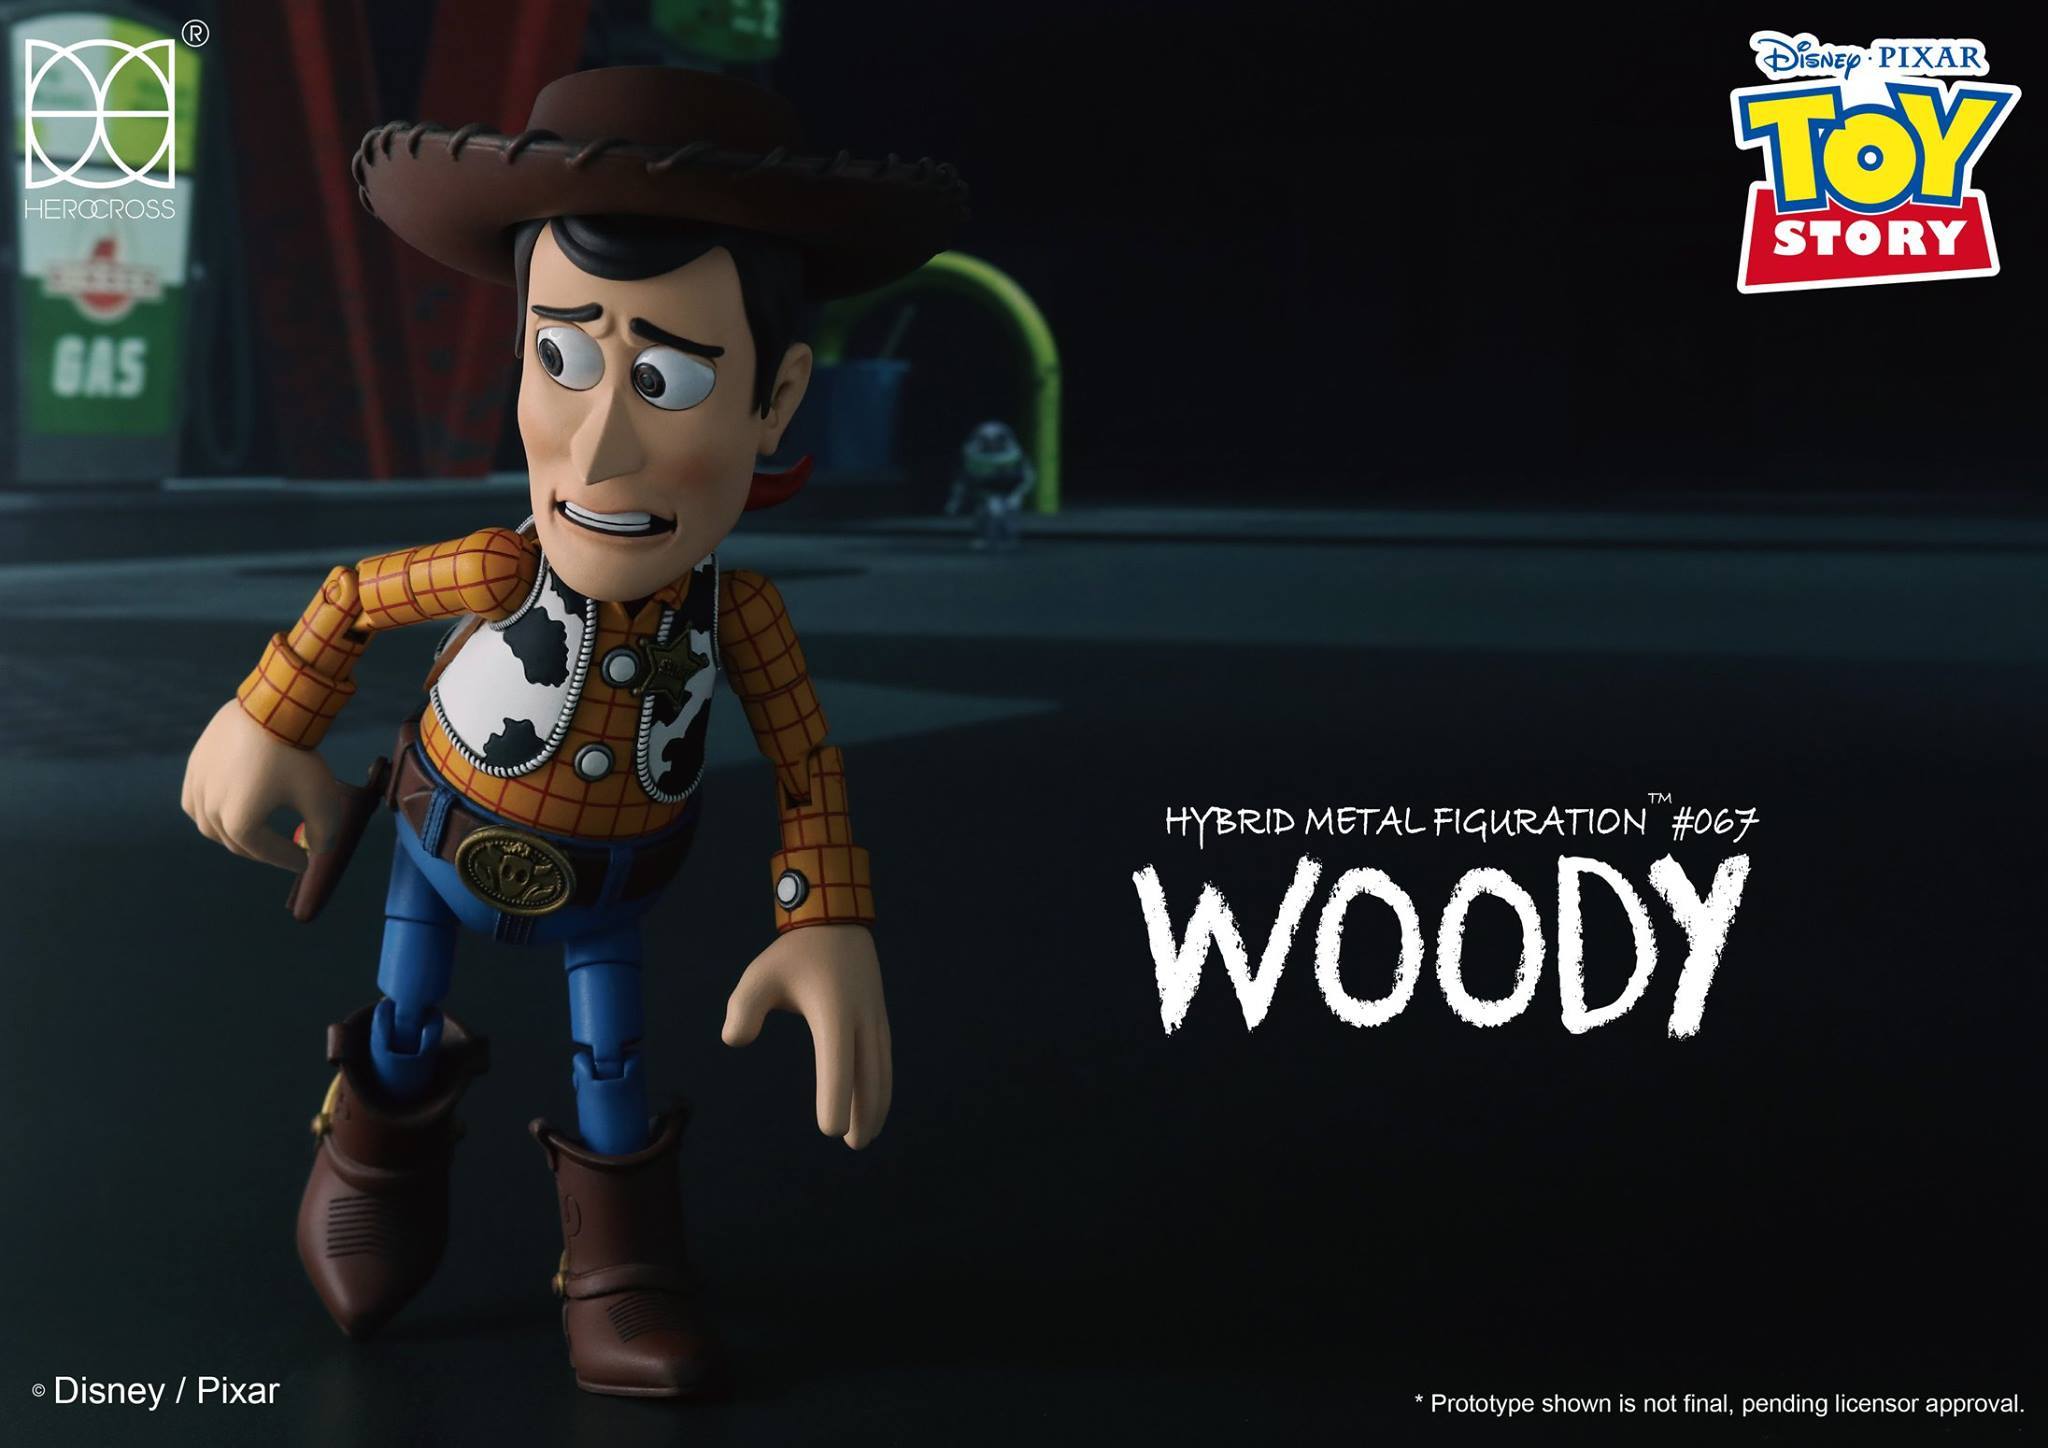 Herocross - Hybrid Metal Figuration - HMF067 - Toy Story - Woody - Marvelous Toys